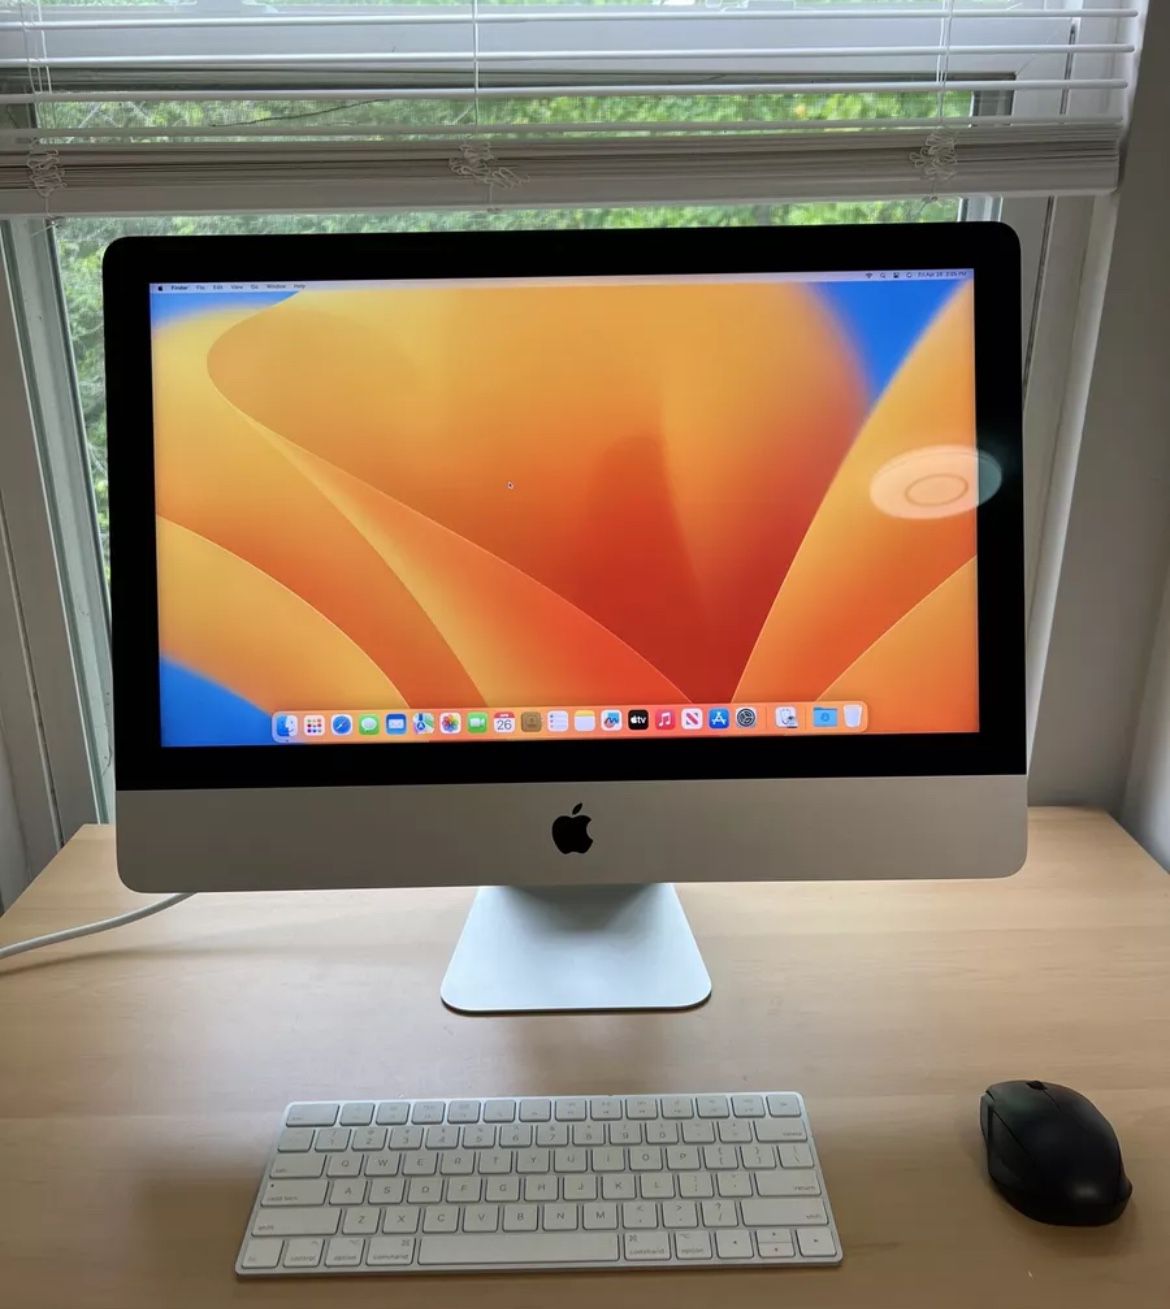 iMac Desktop Fully Loaded 4 Music Recording/Video Editing/Film/Photos/Djn/ Pro Tools,Logic,Ableton,Final Cut,Antares,Fl Studio/Adobe Suite More!! 